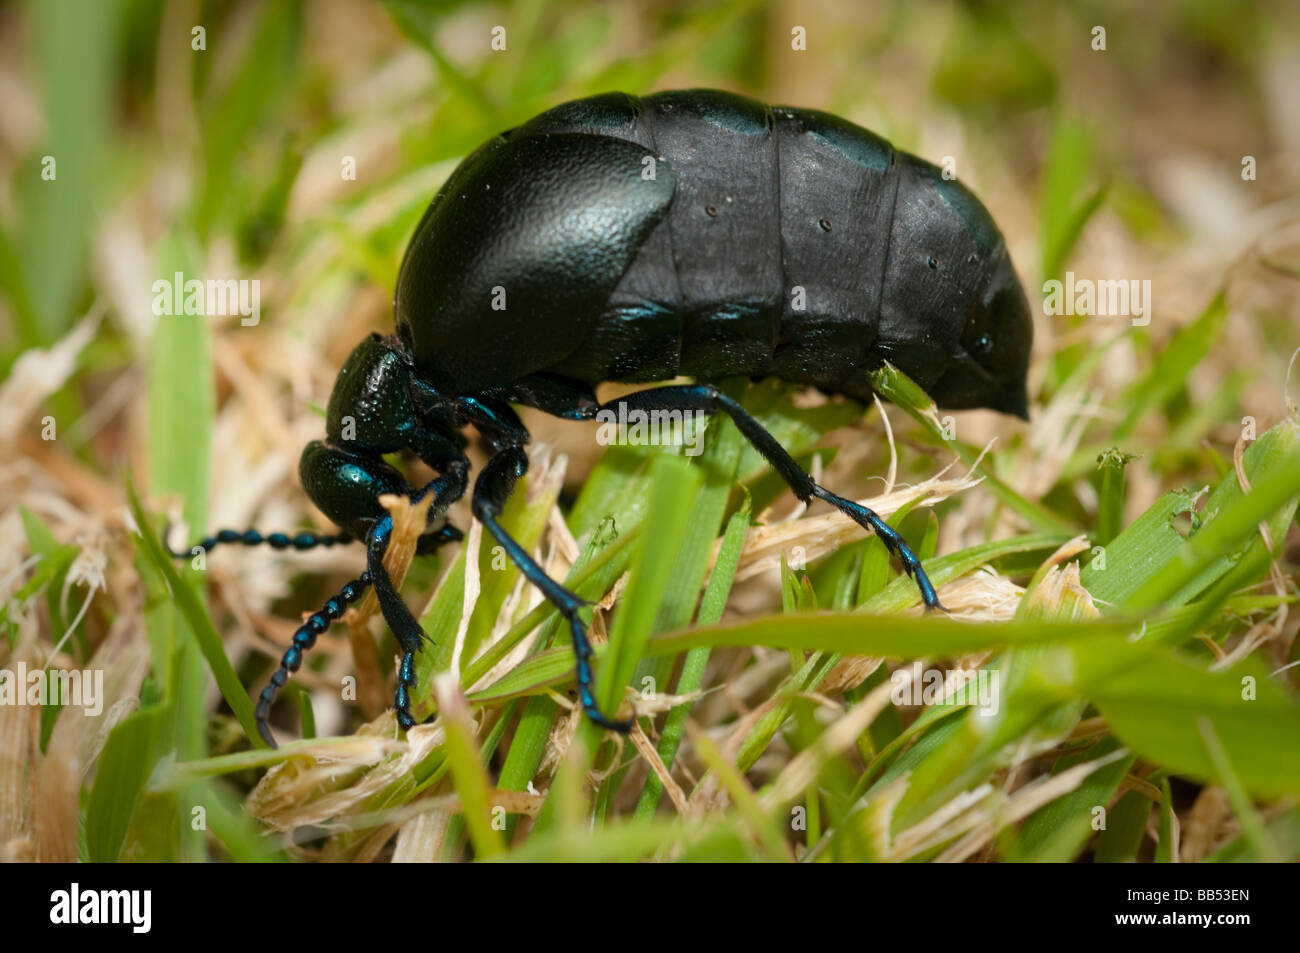 Oil beetle, Meloe proscarabeus Stock Photo